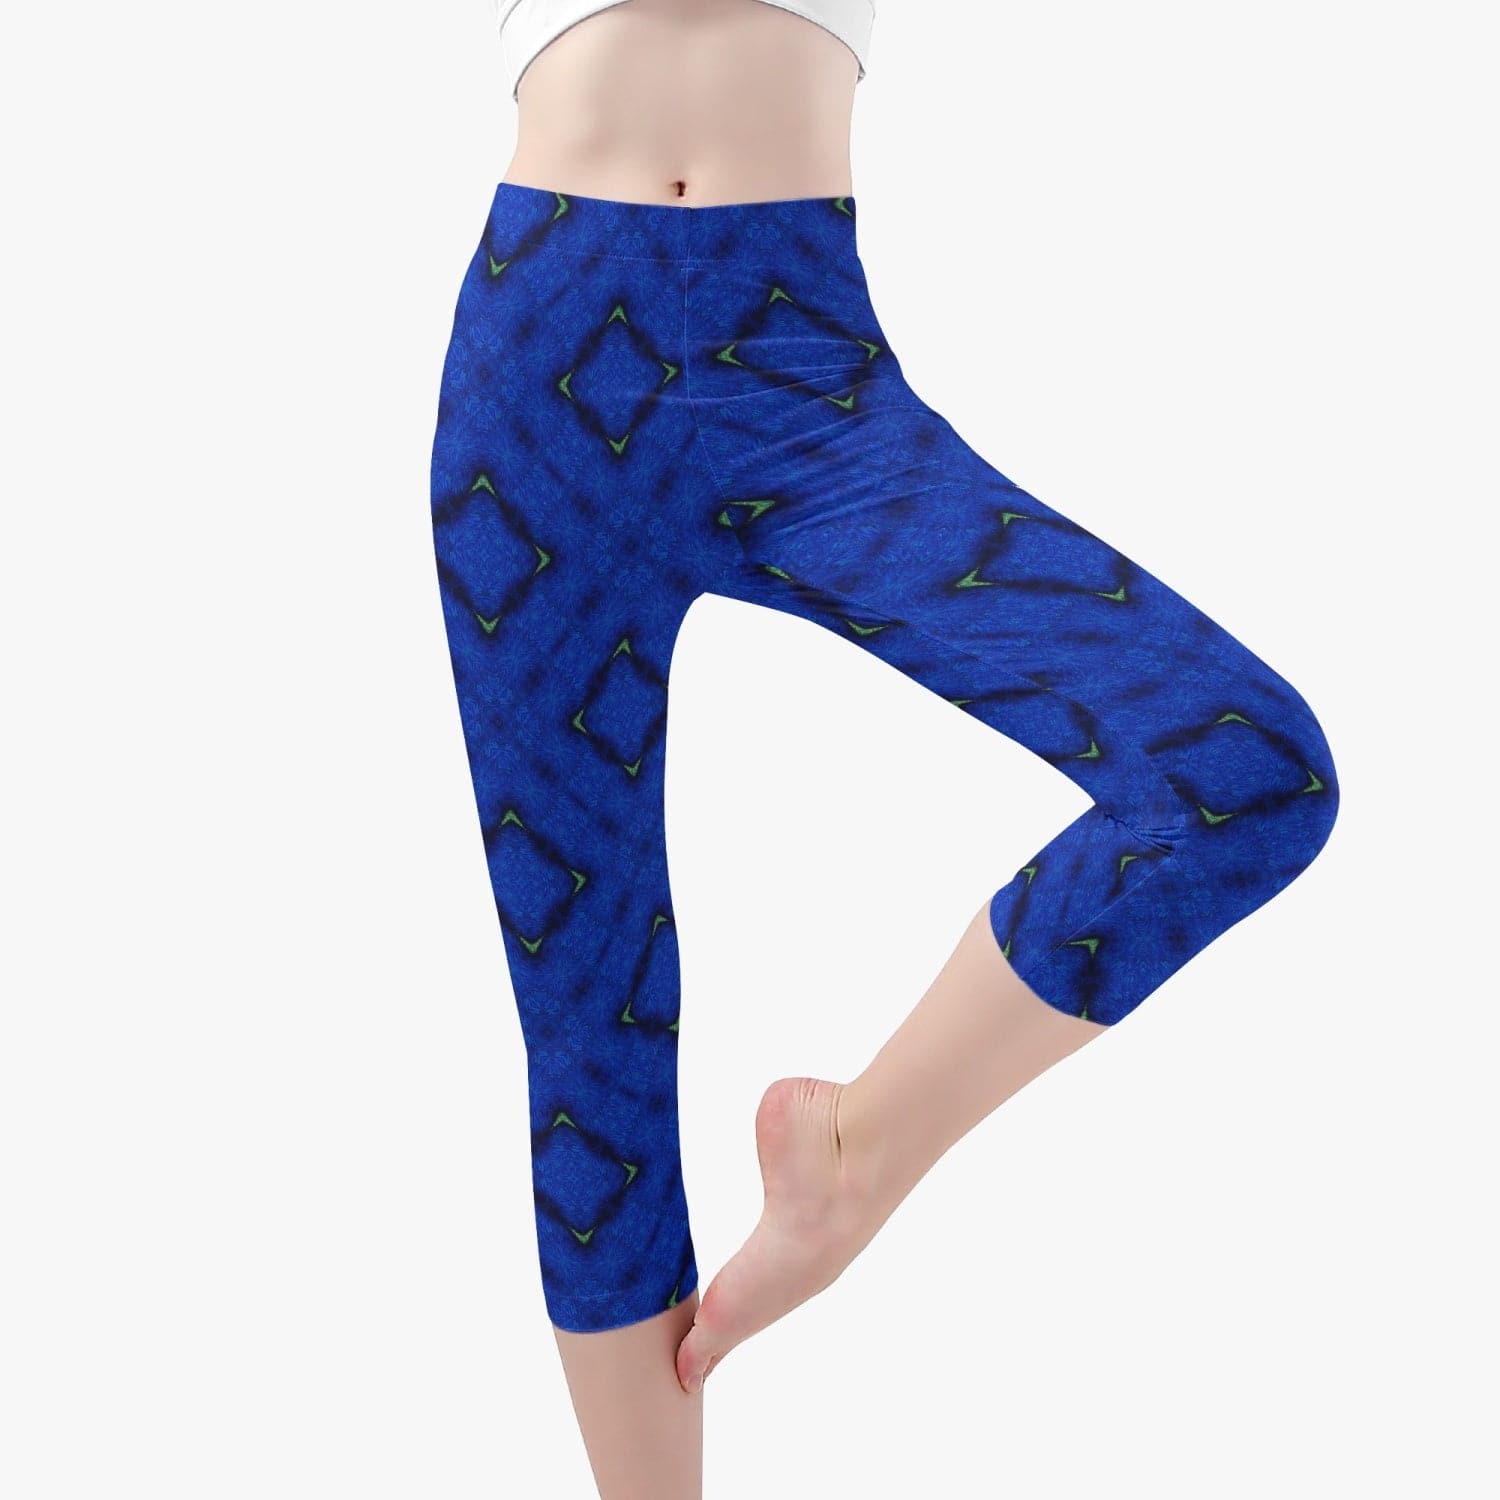 Indigo Third Eye Chacra  Short Type Yoga Pants, by Sensus Studio Design